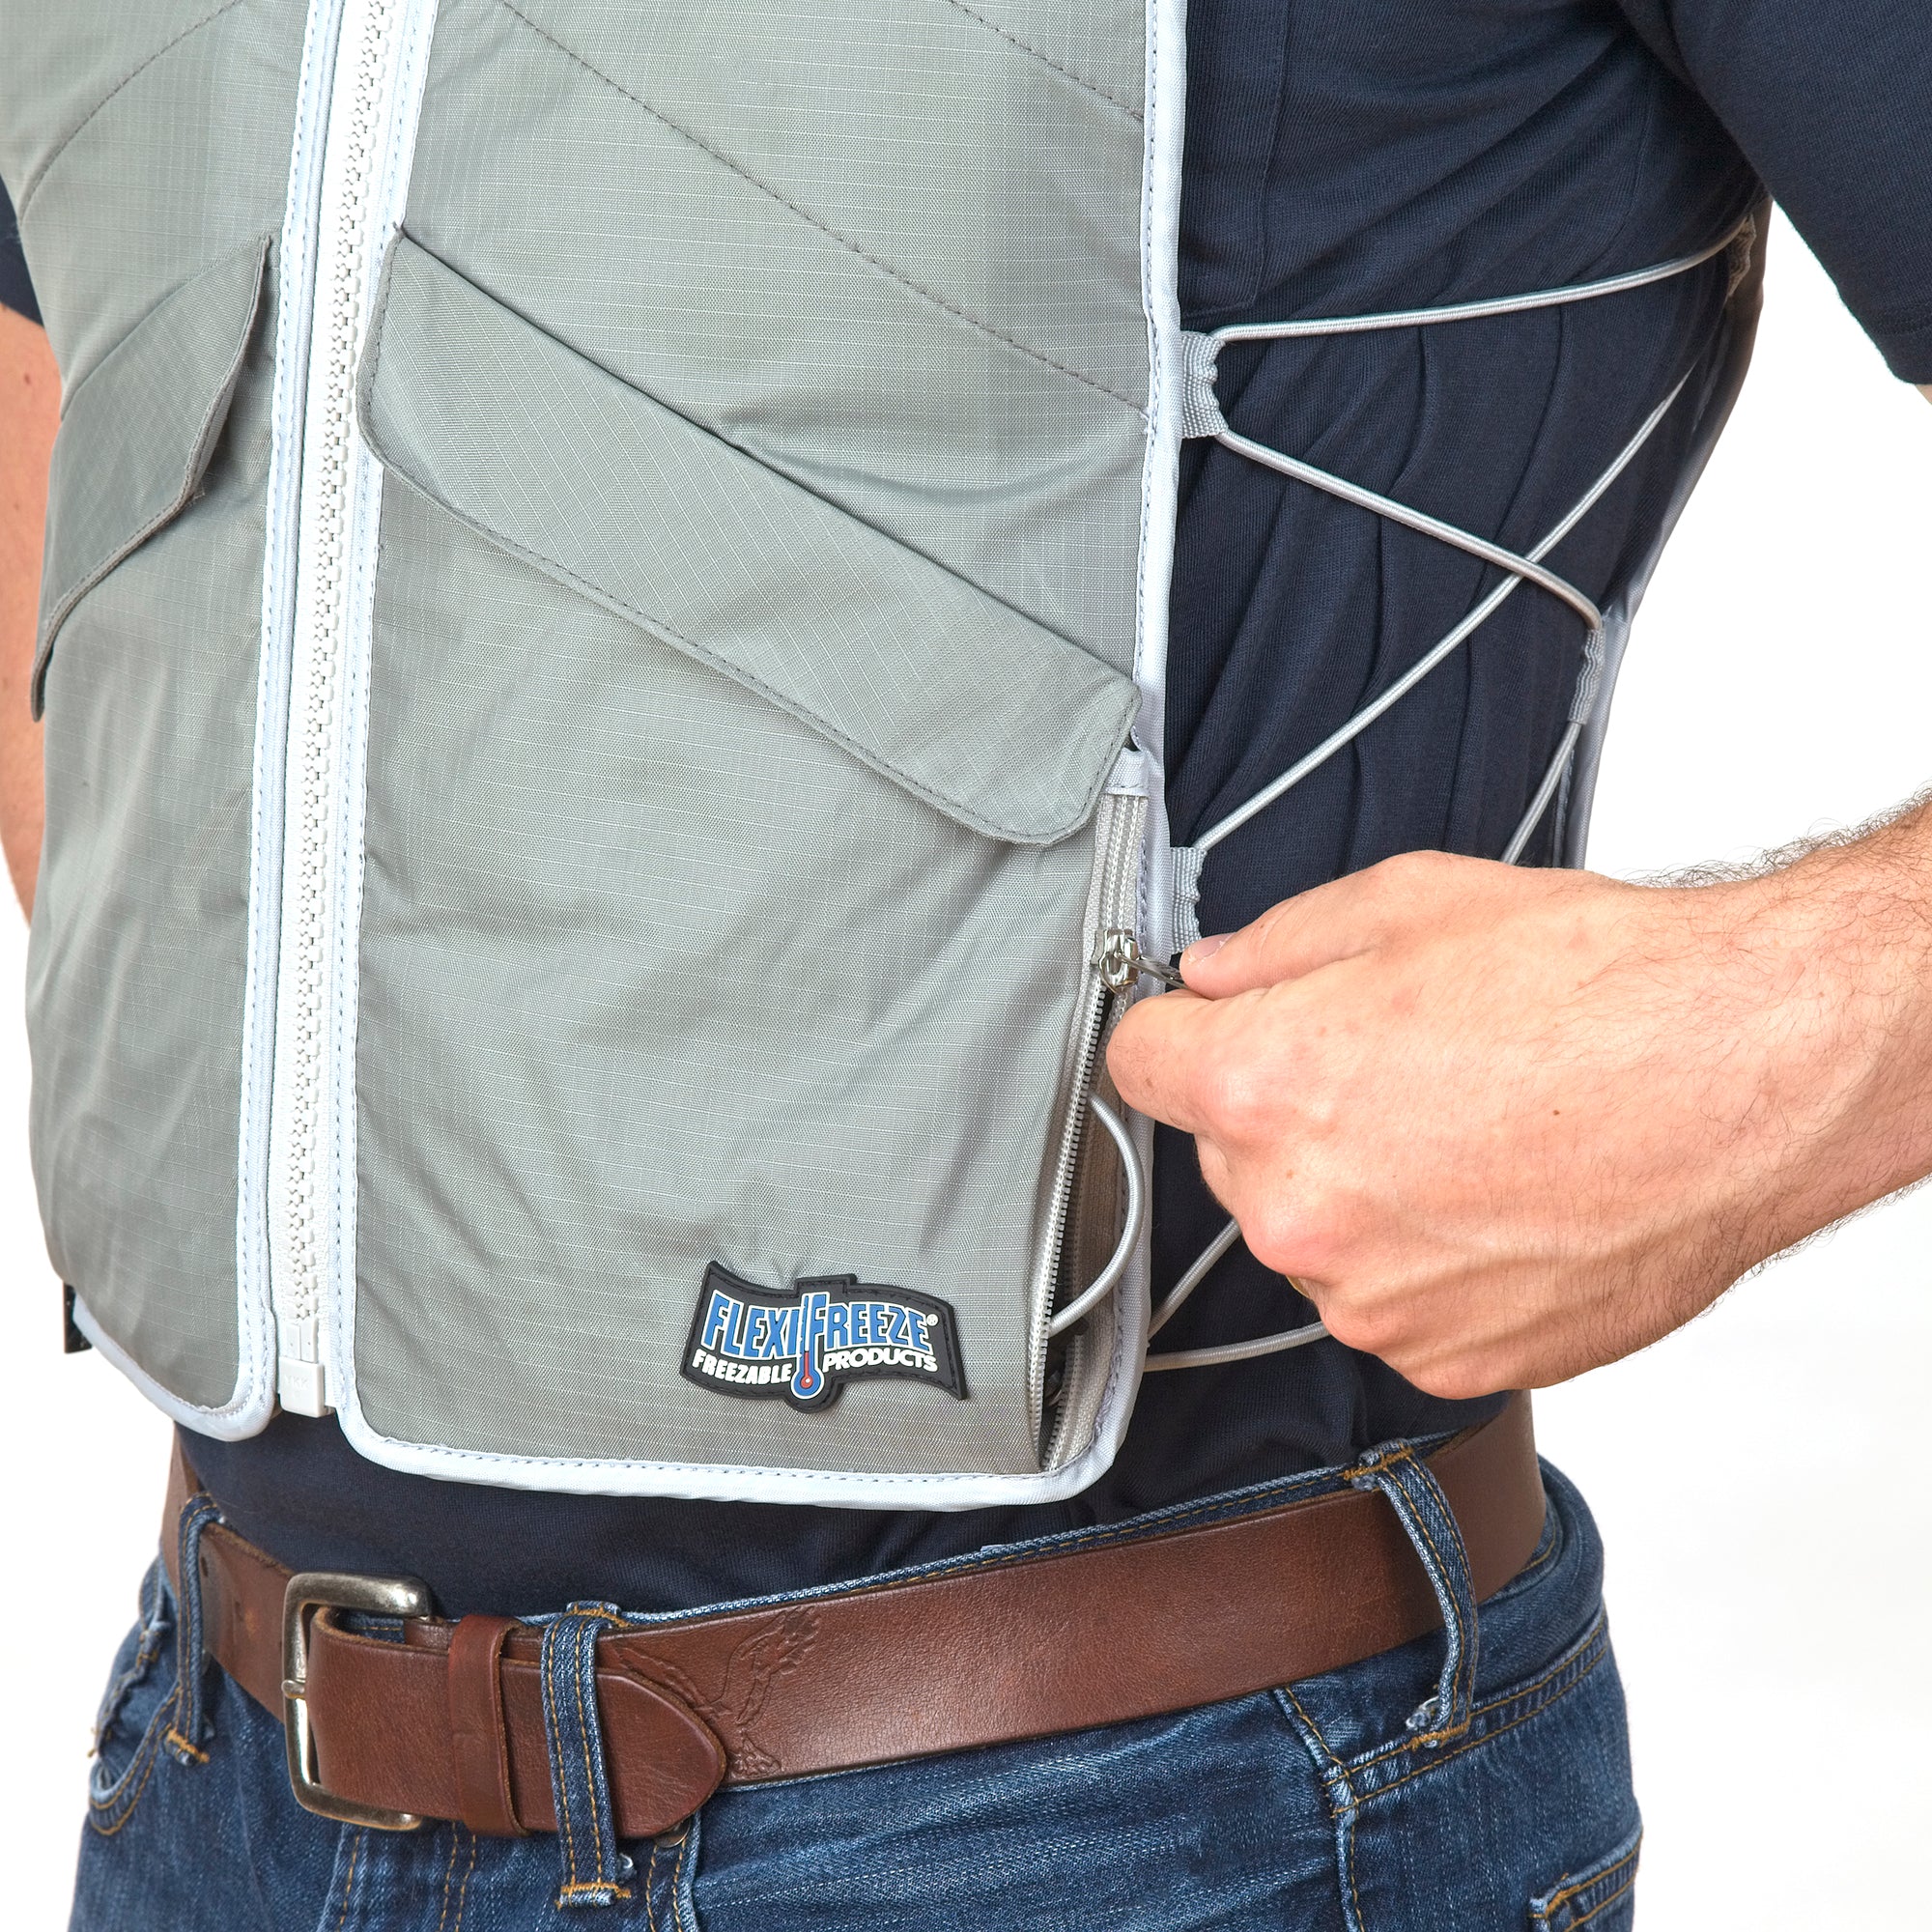 Man wearing FlexiFreeze professional zipper ice vest, charcoal, adjusting sizing strings